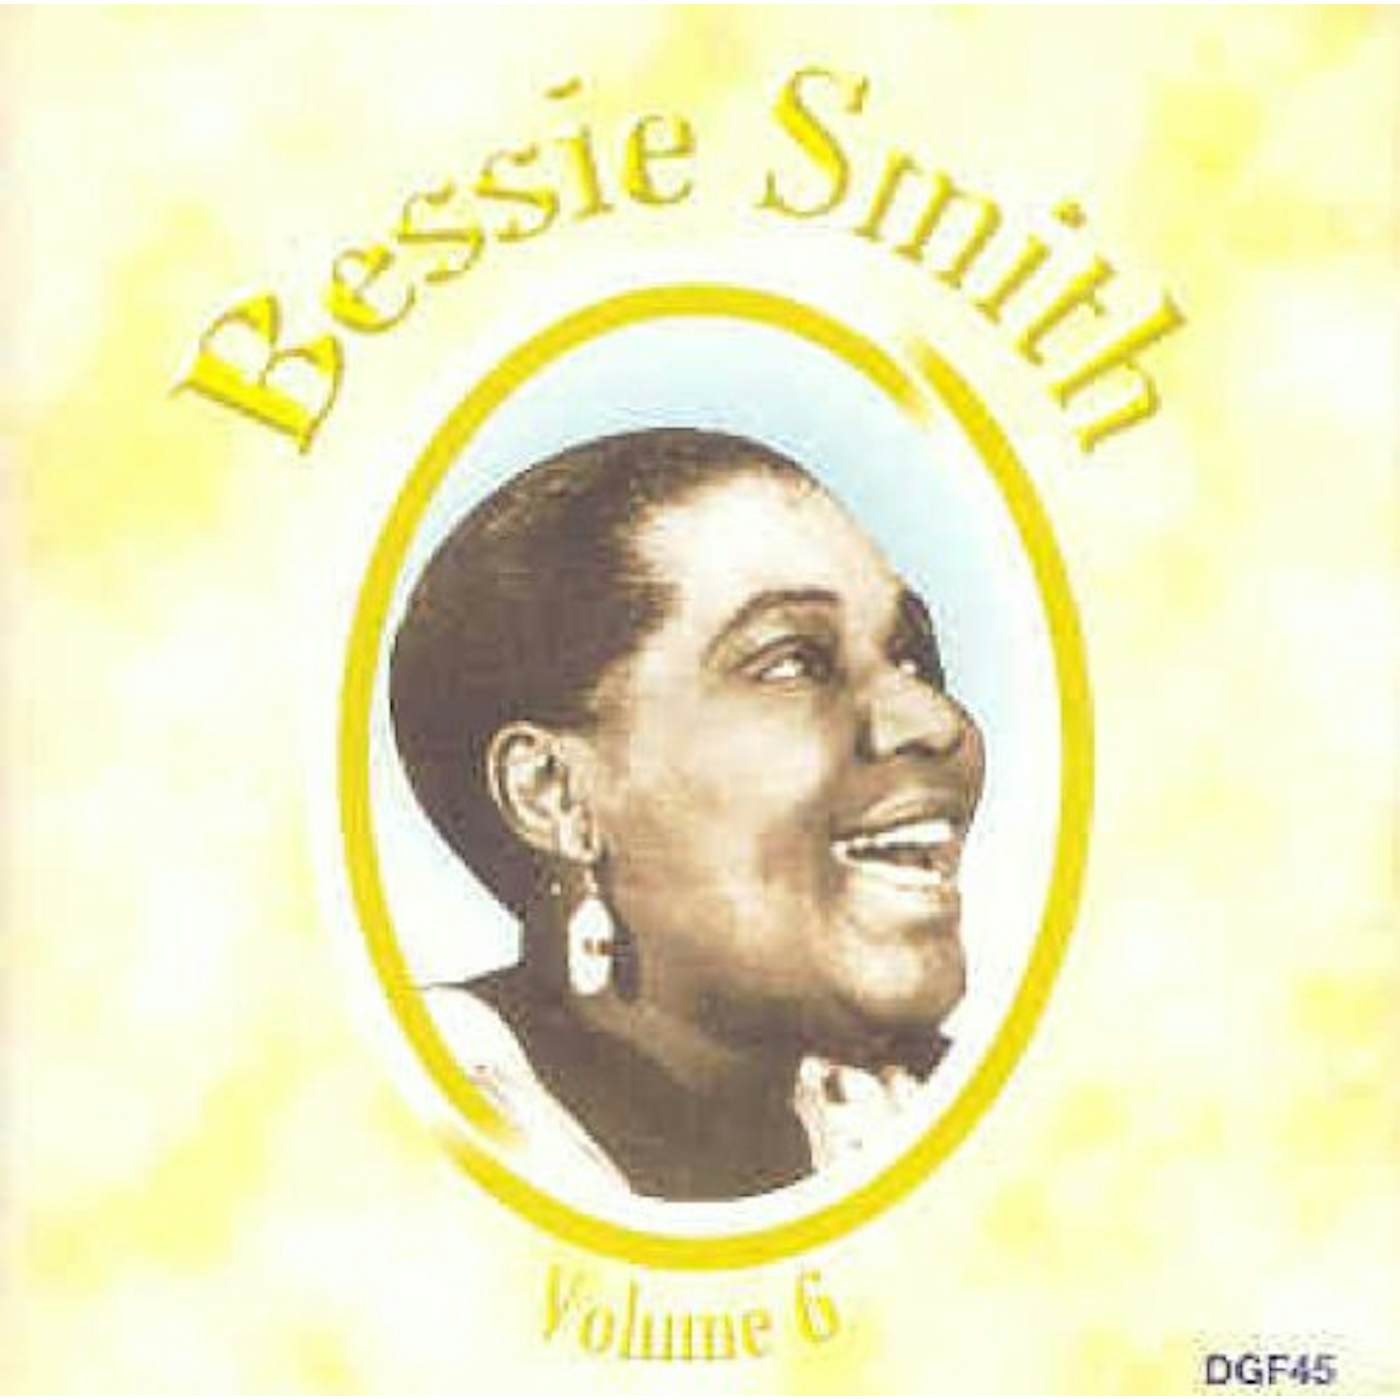 Bessie Smith COMPLETE RECORDINGS 6 CD